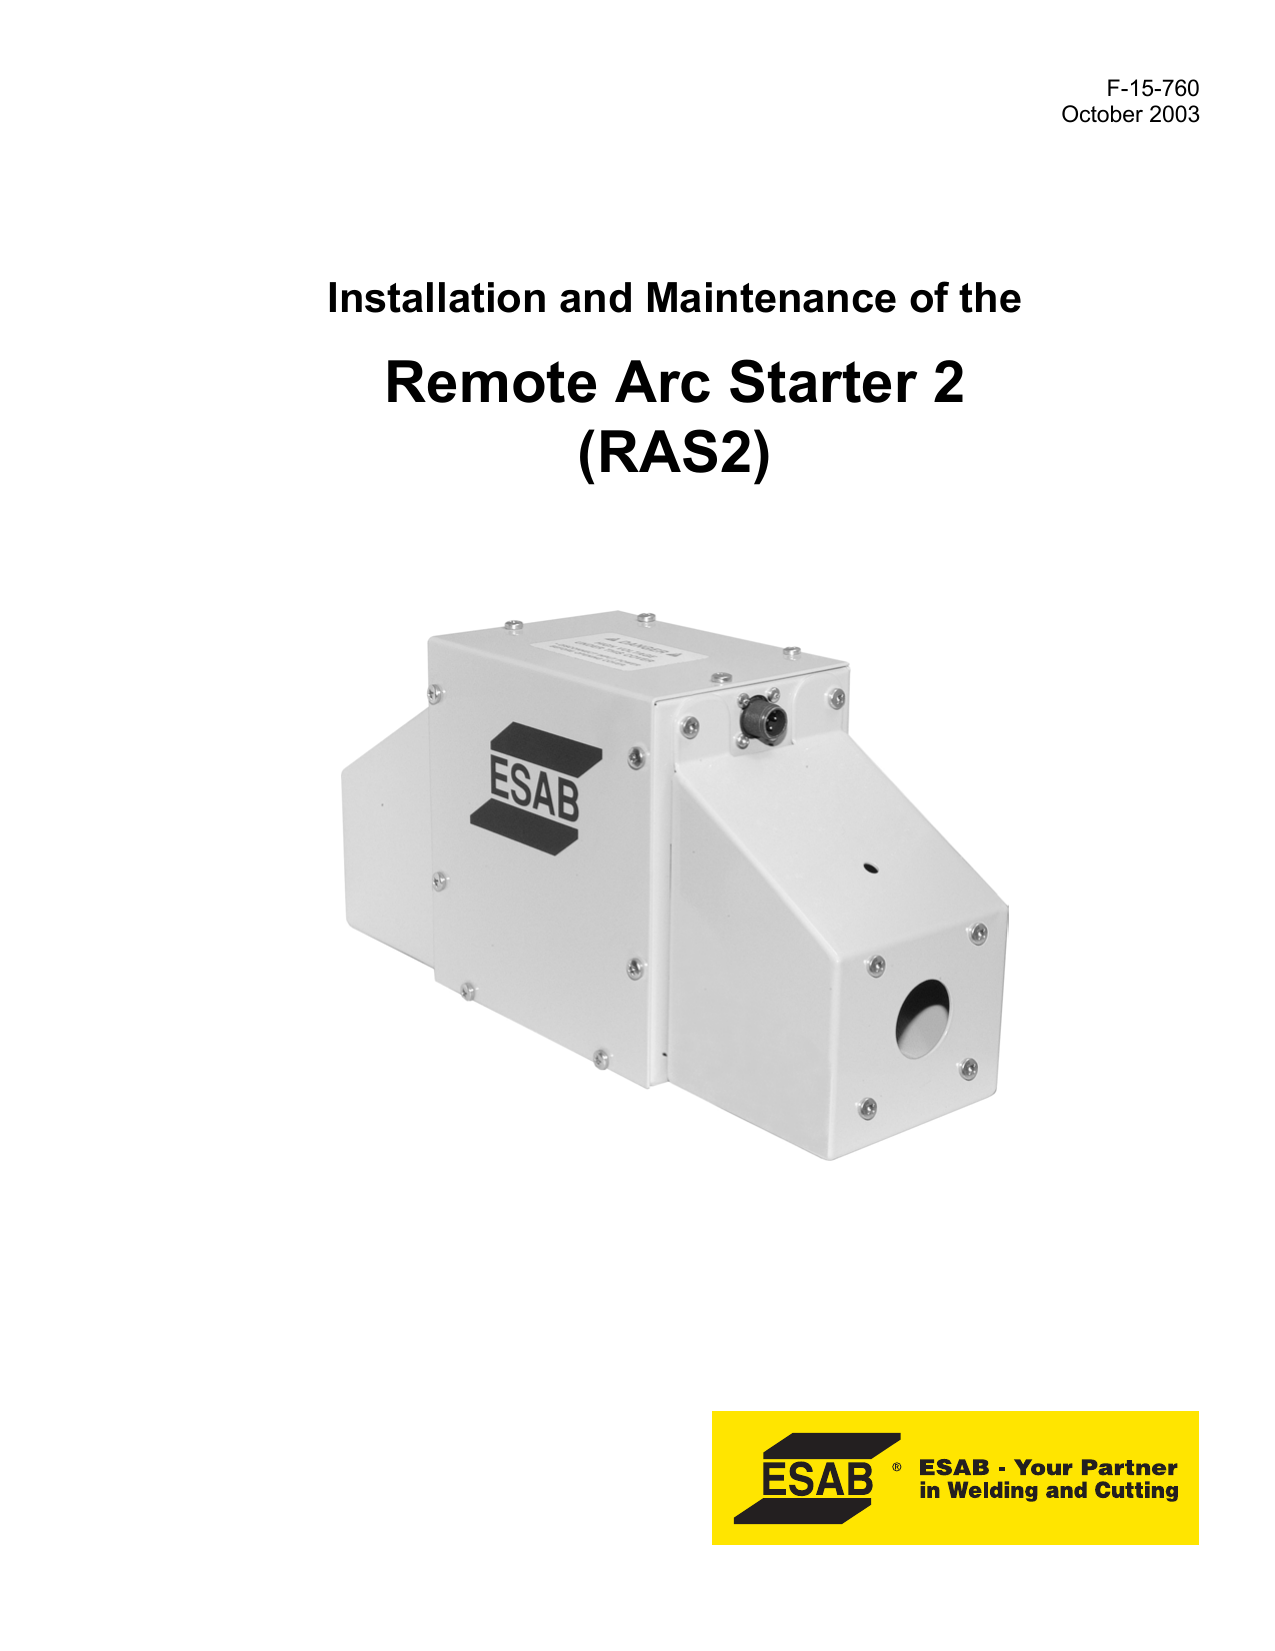 Remote Arc Starter 2 (RAS2)